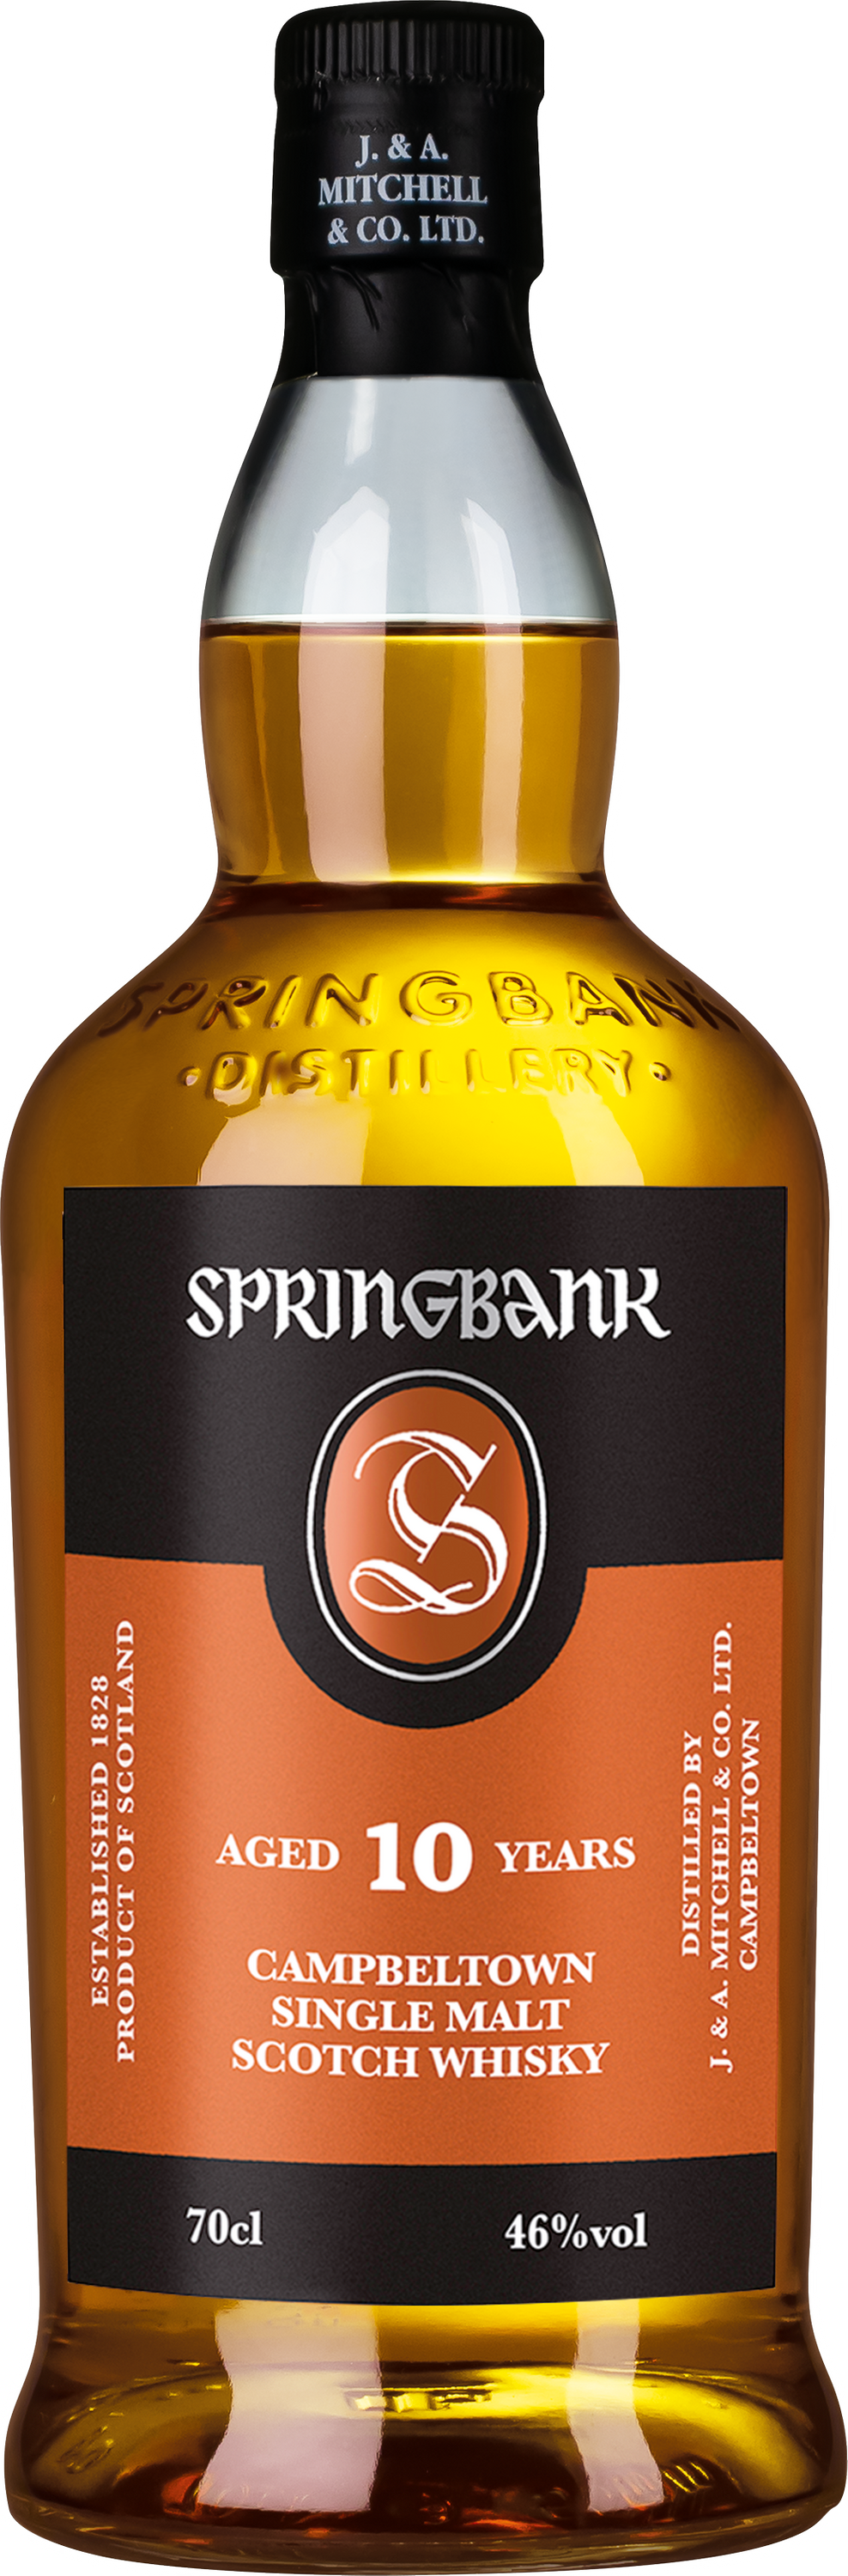 Springbank 10 Years Campbeltown Single Malt Scotch Whiskey 0.7l, alc. 46% by volume